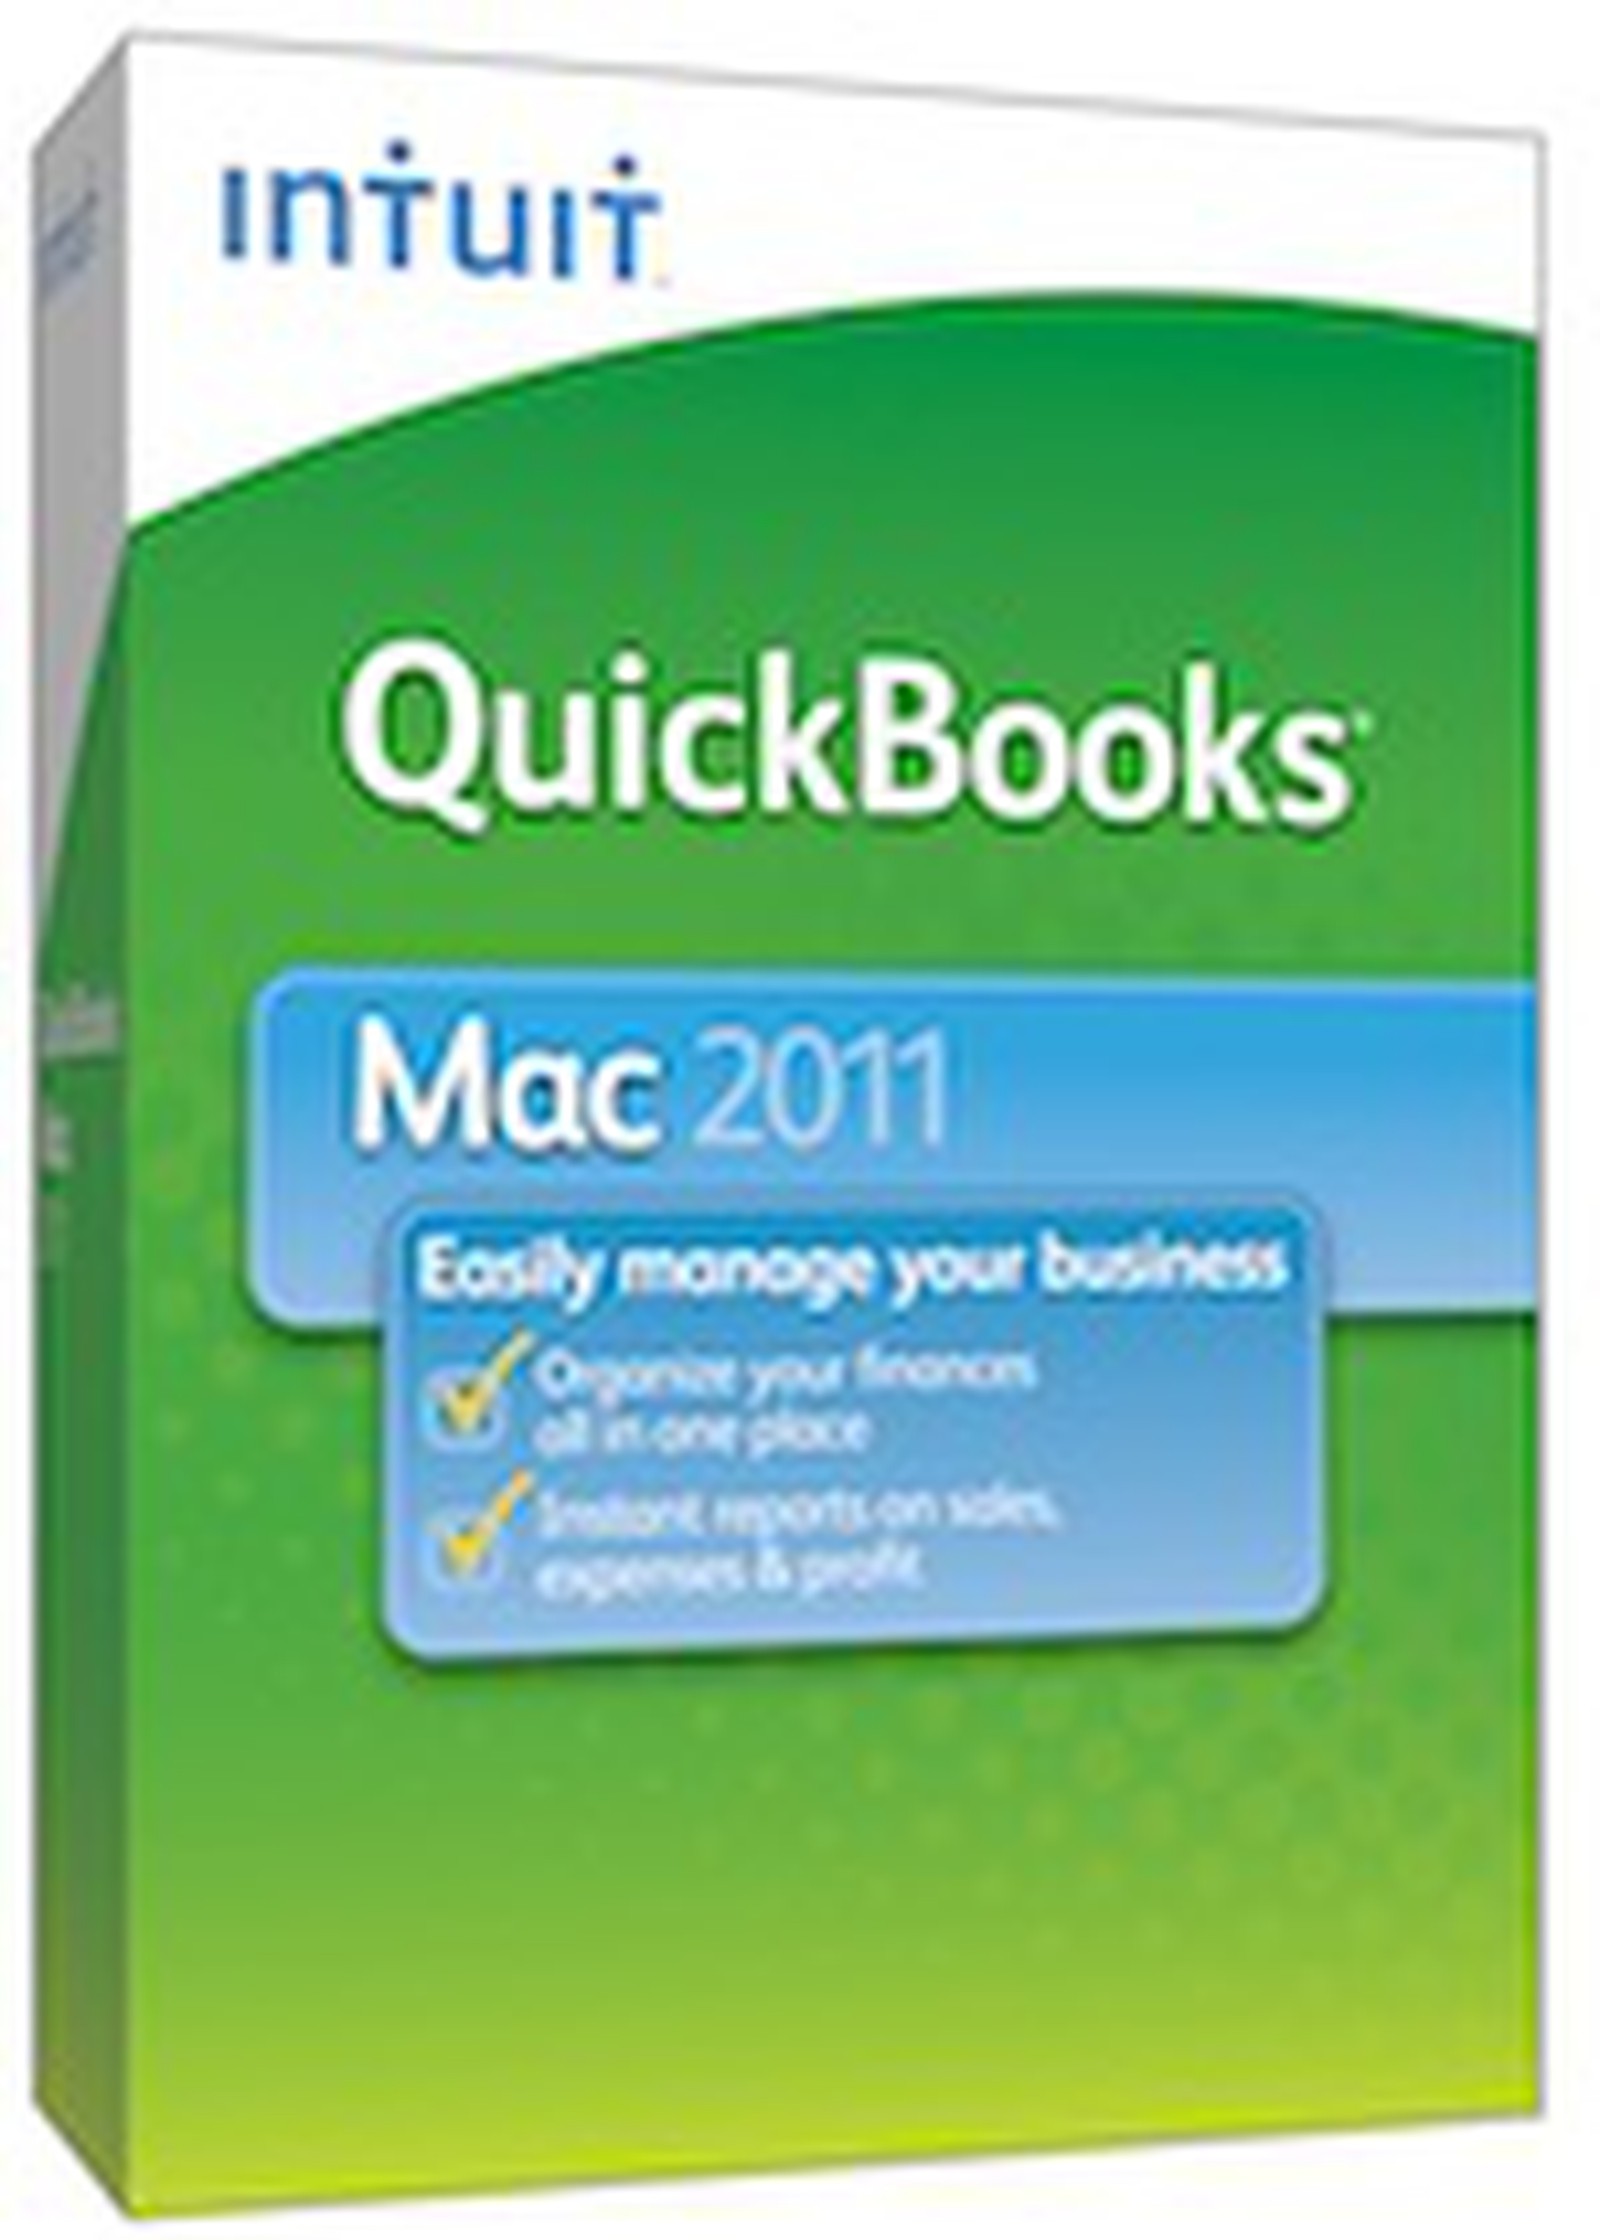 quickbooks on mac review